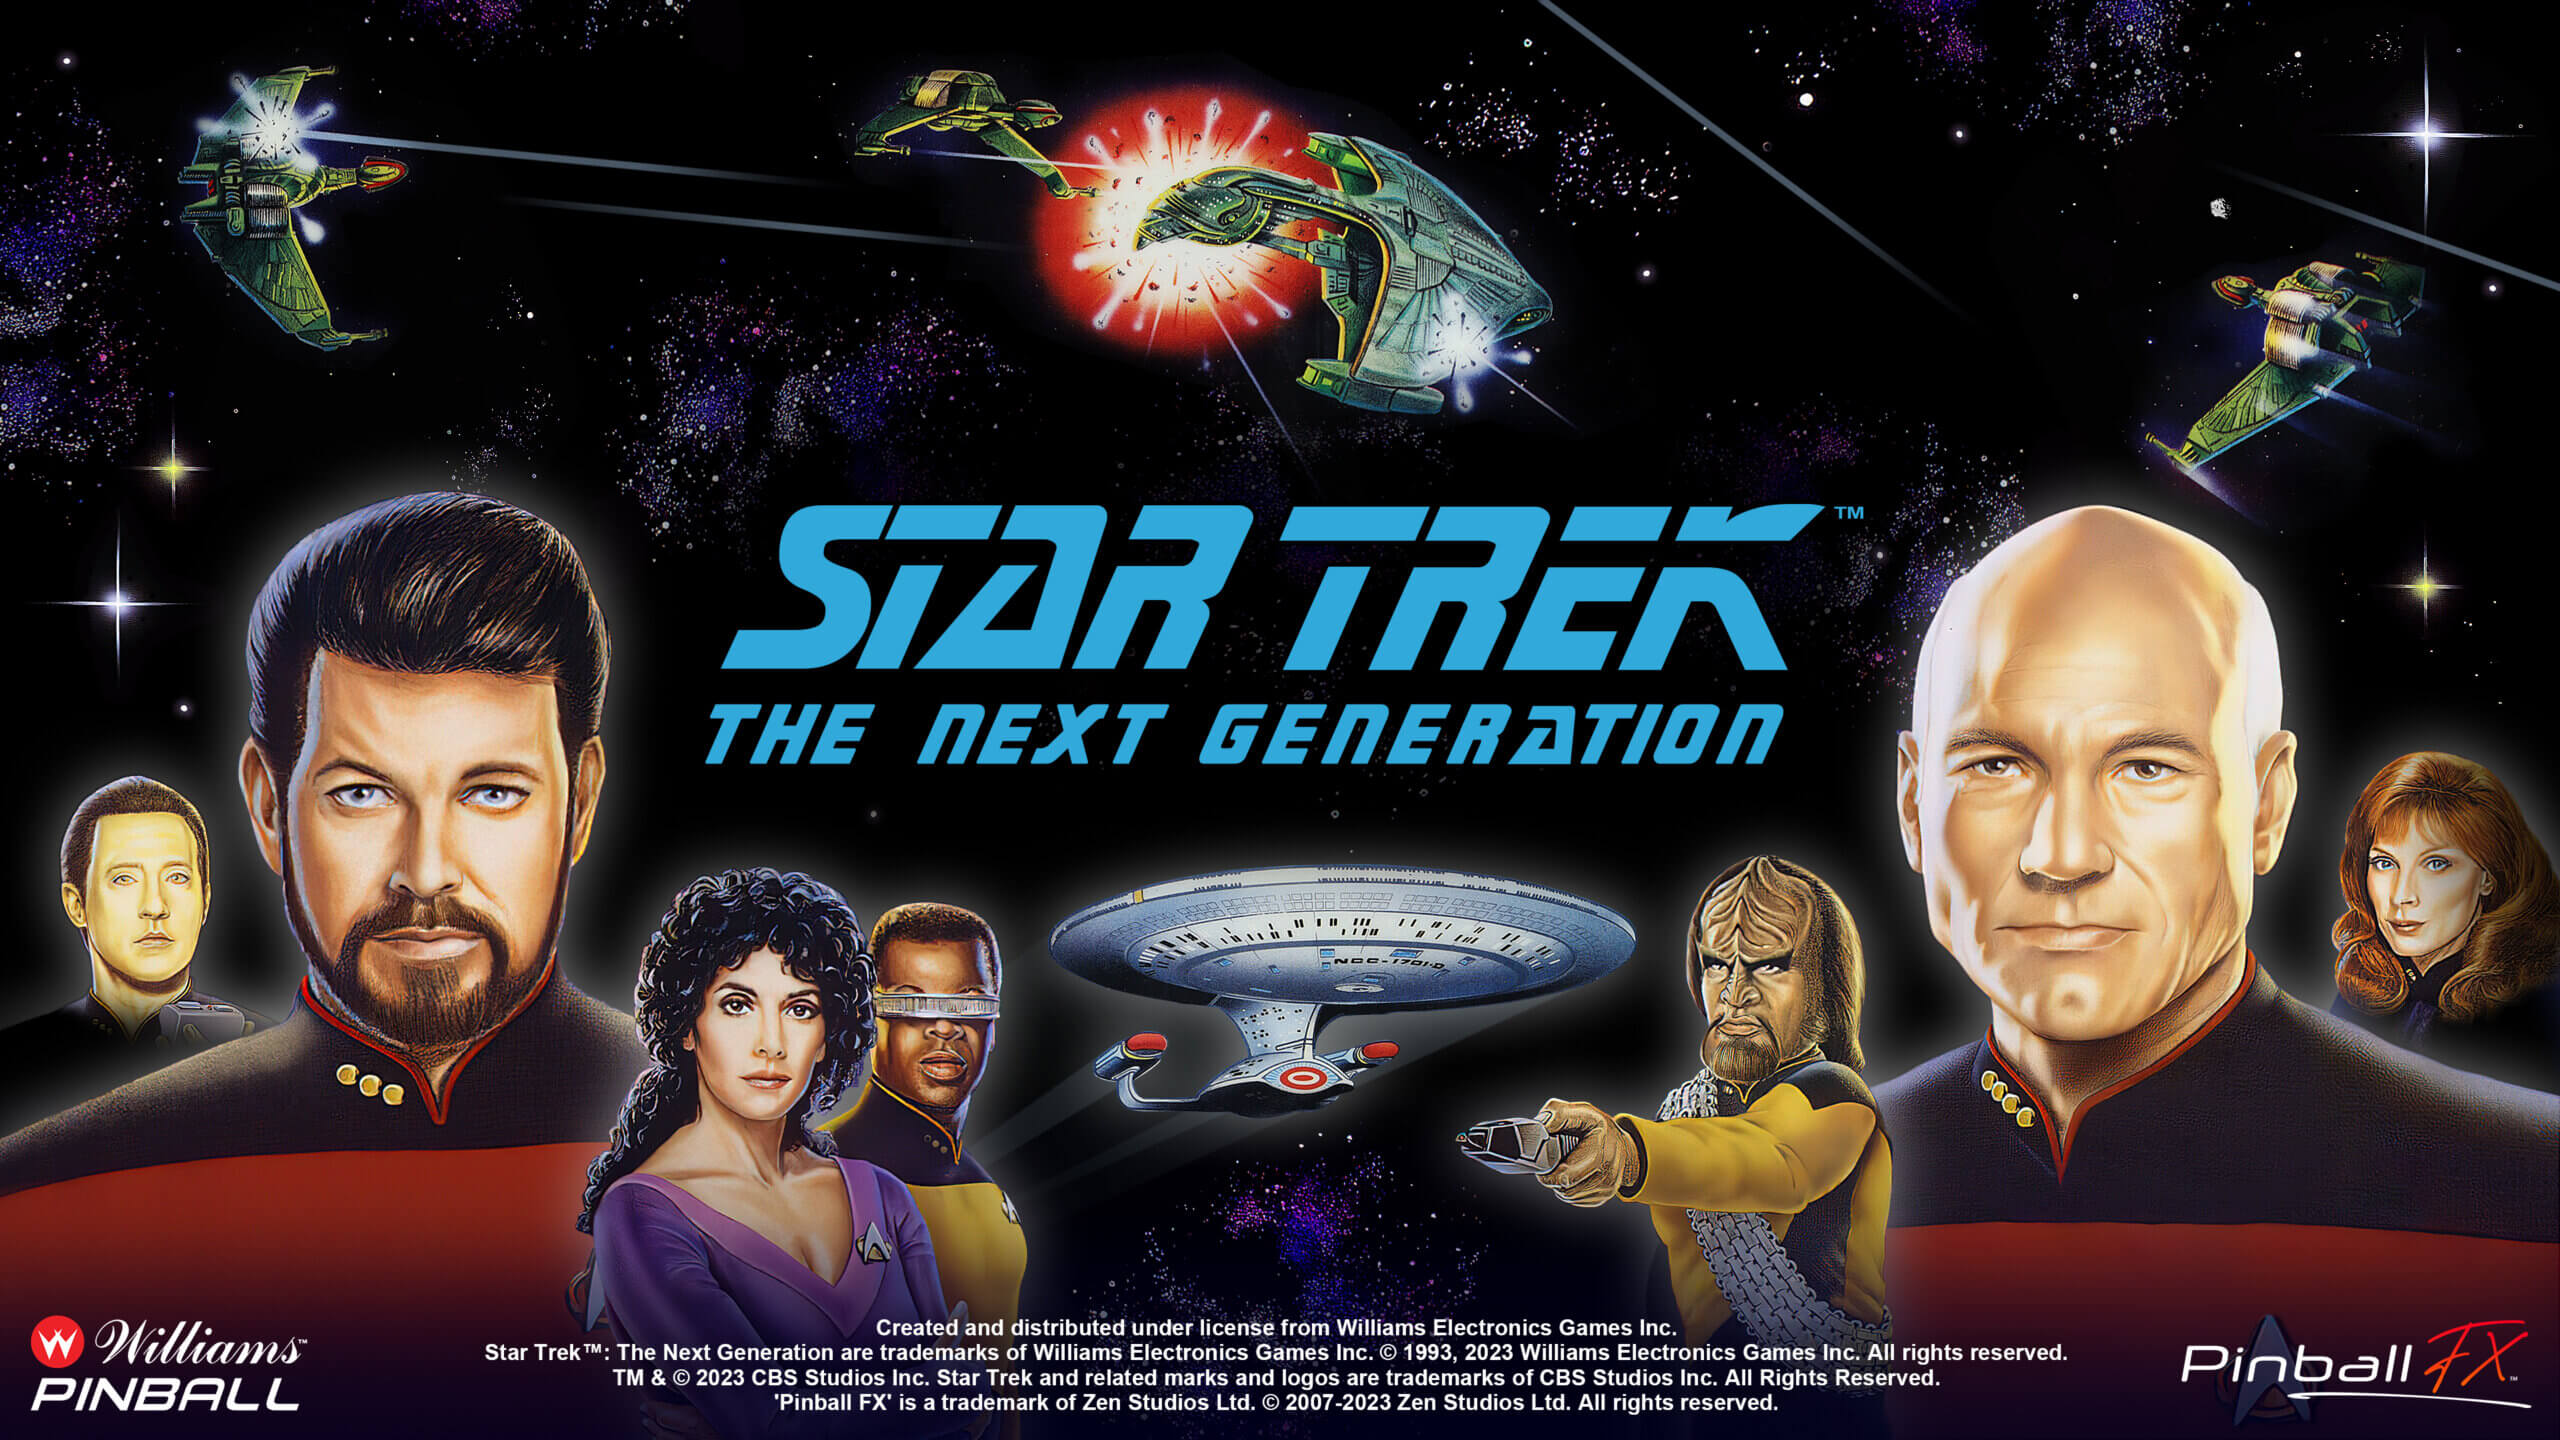 Williams™️ Pinball: Star Trek™: The Next Generation